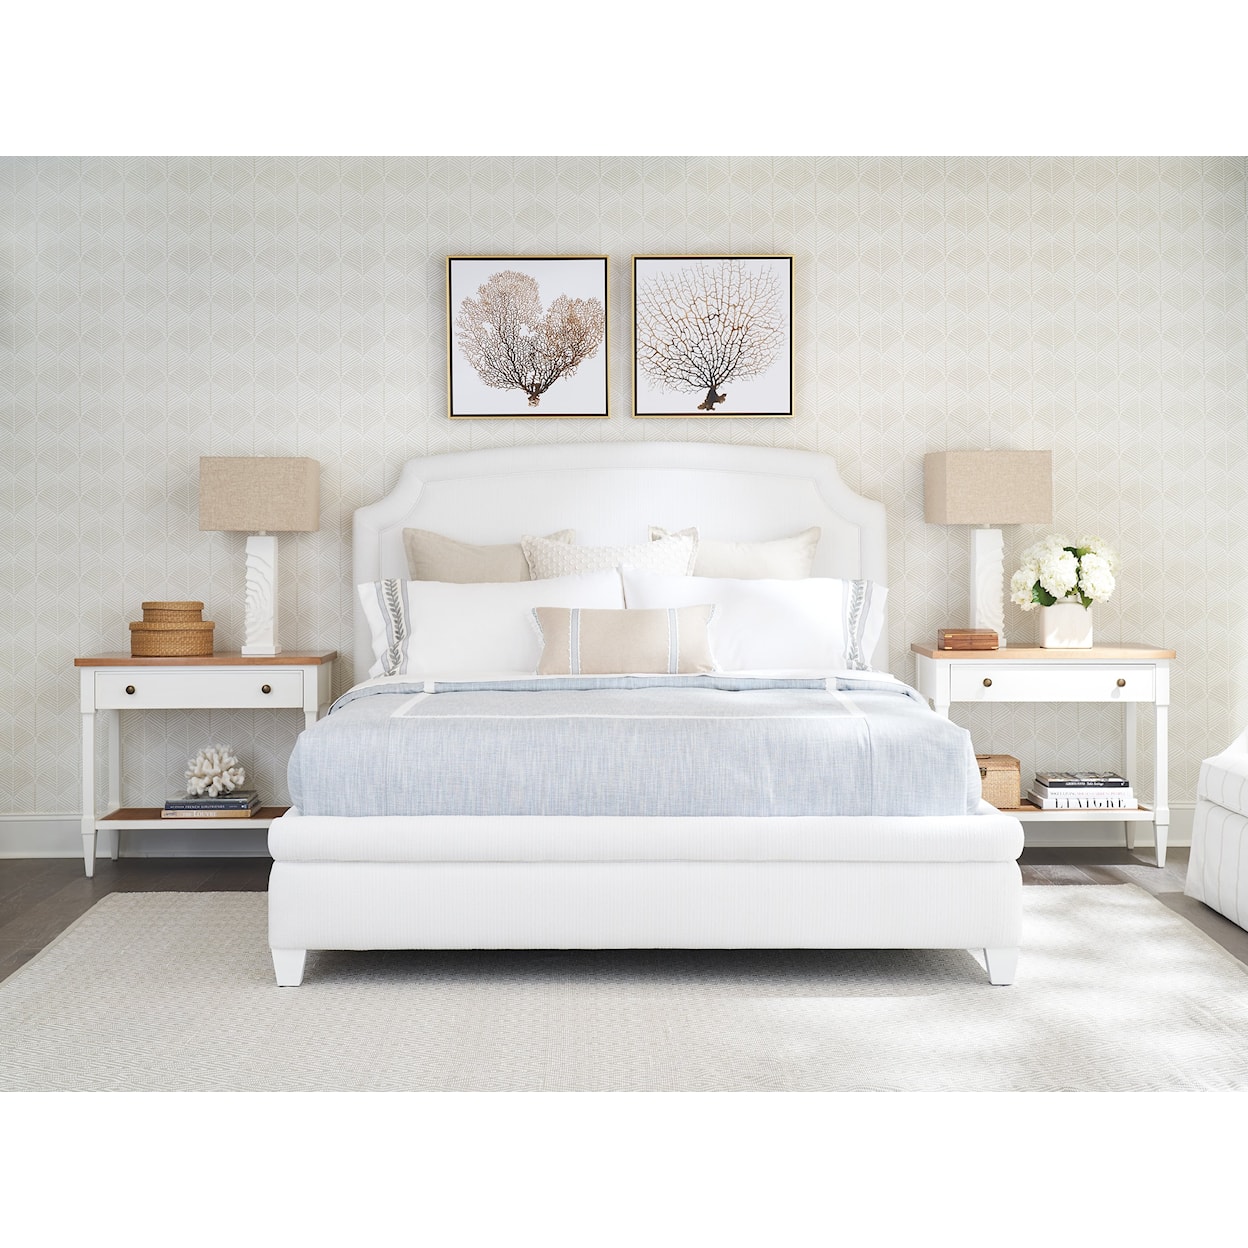 Barclay Butera Laguna King Bedroom Set with Upholstered Bed